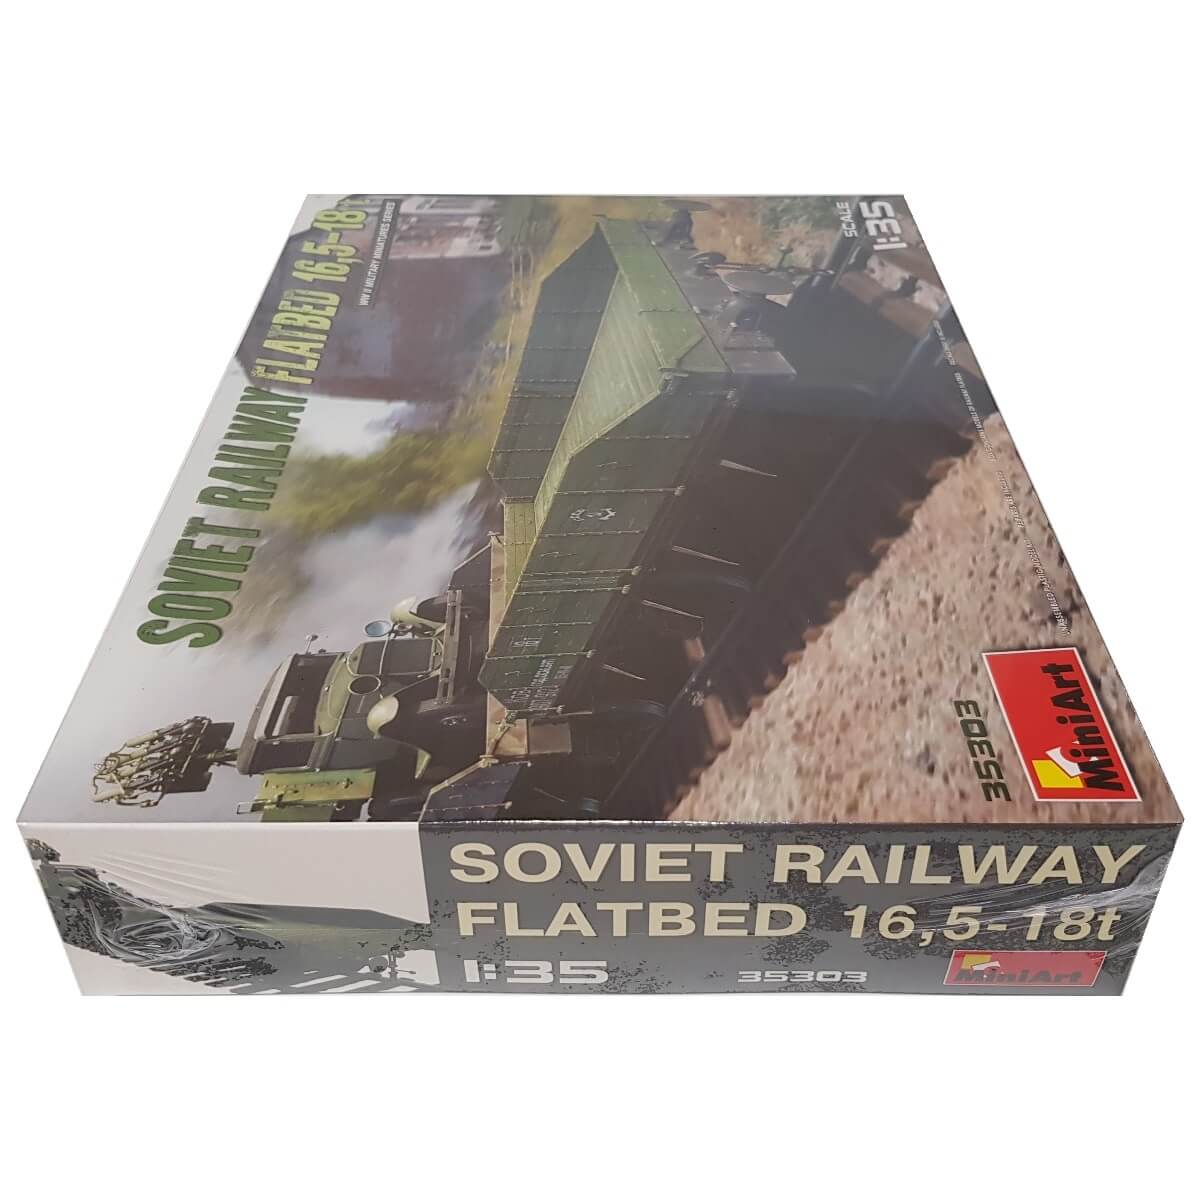 1:35 Soviet Railway Flatbed 16.5-18t - MINIART